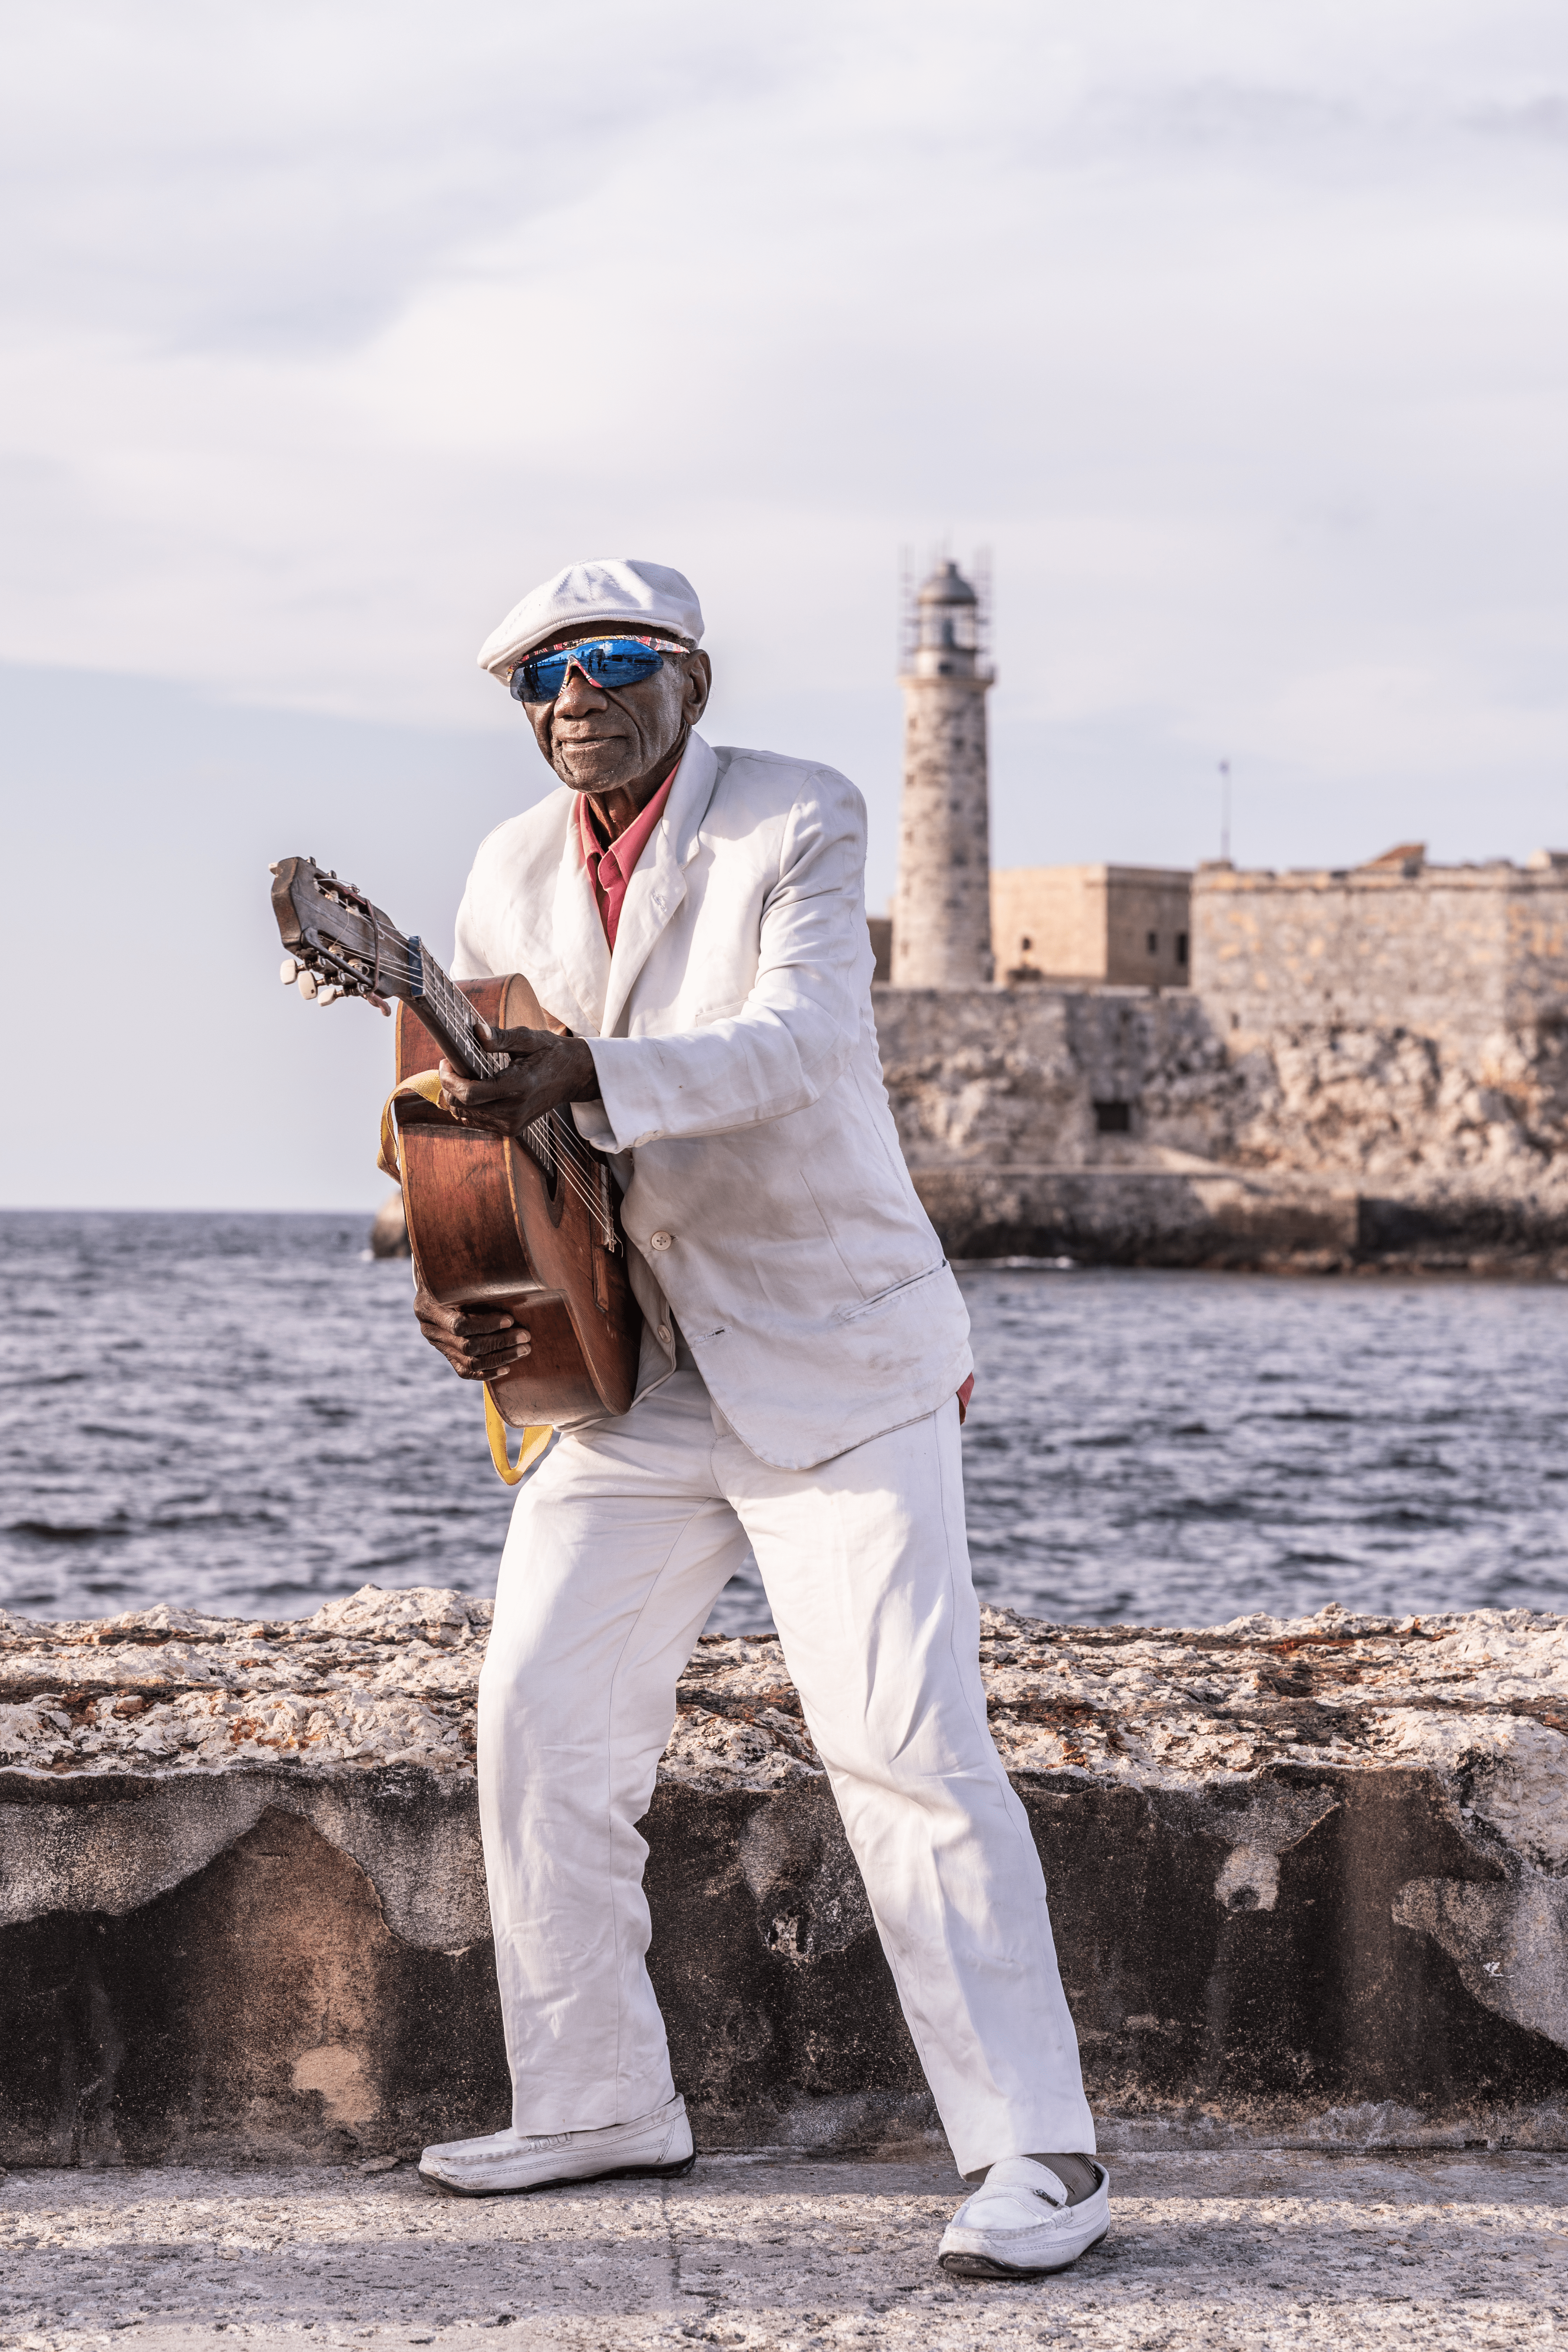 Rey Maraca in El Malecon, Havana - Cuba 